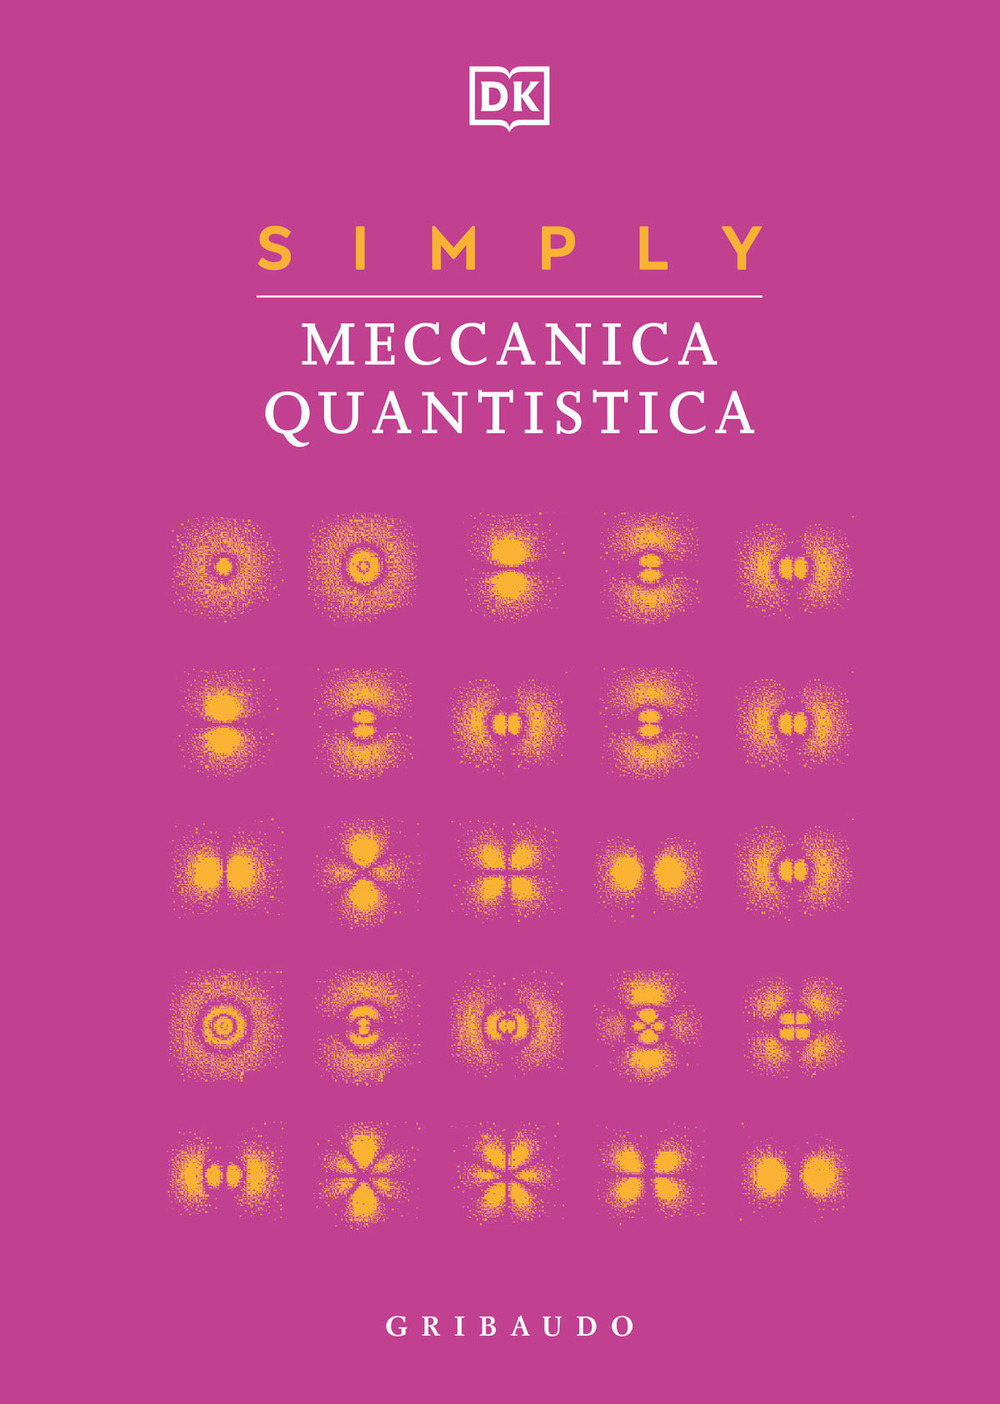 Image of Simply meccanica quantistica